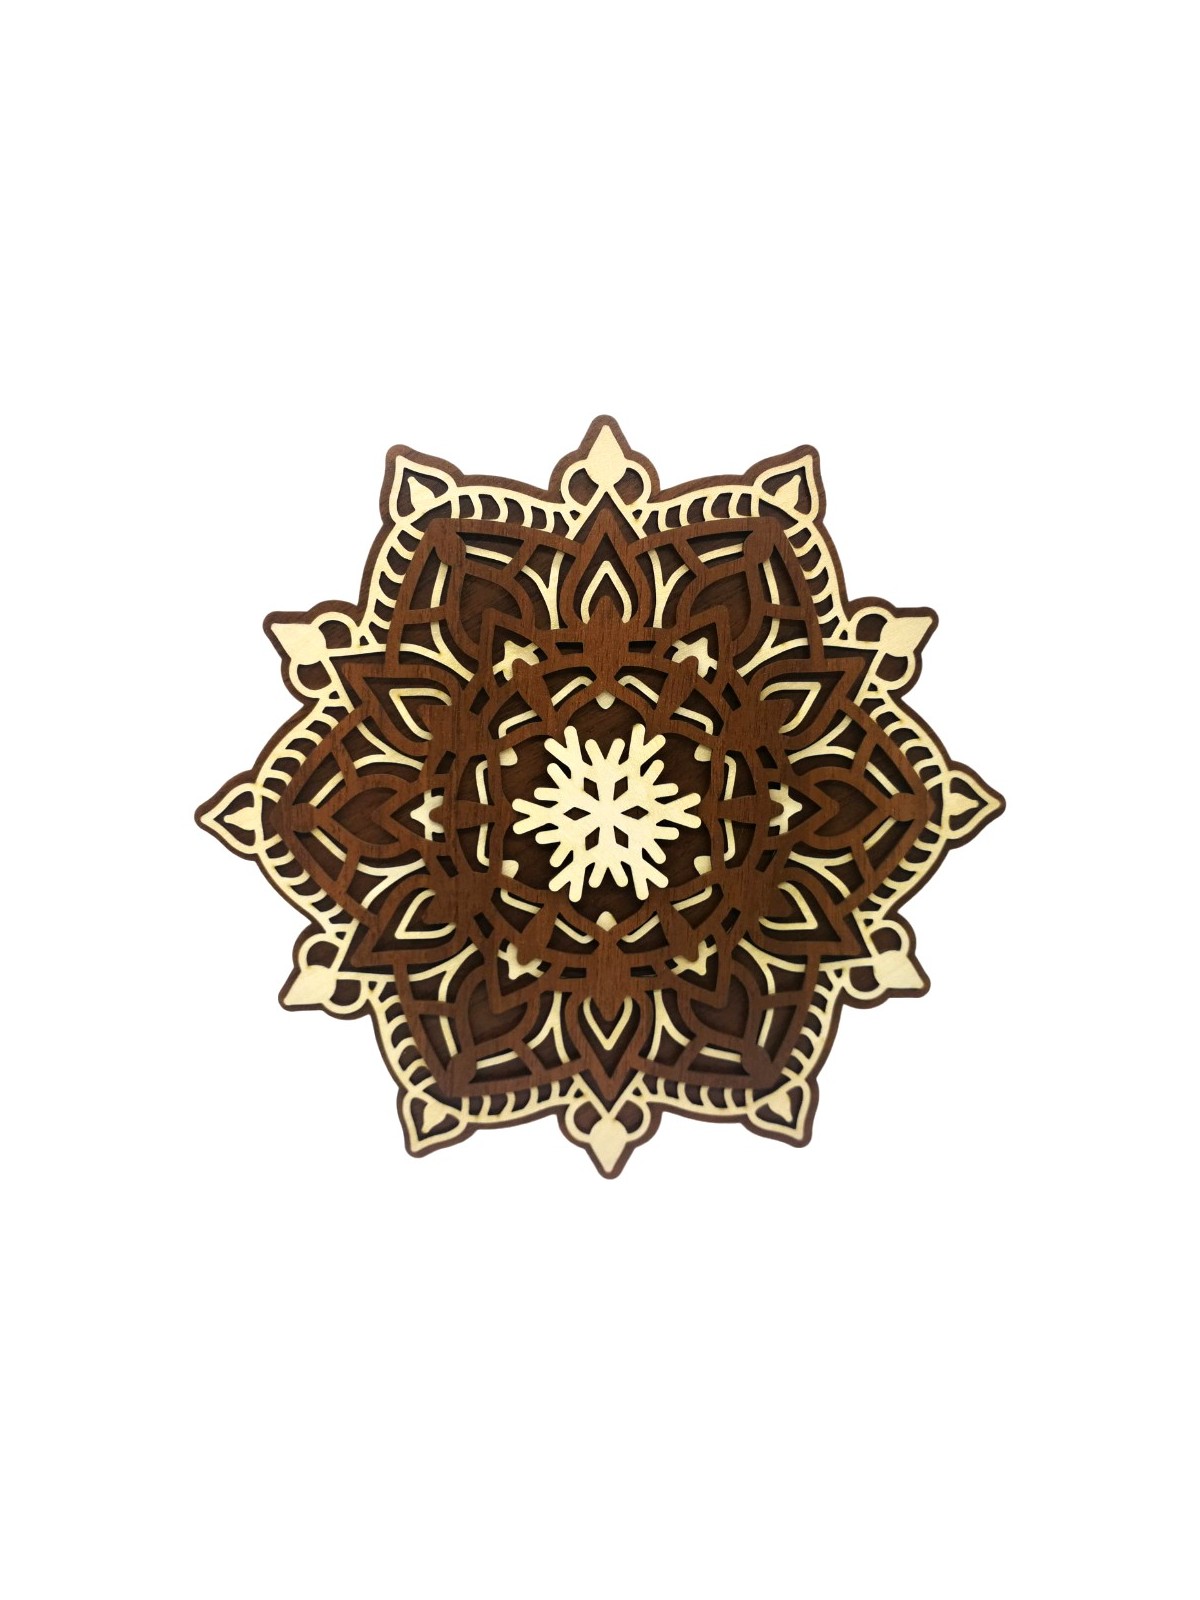 Mandala - star flower